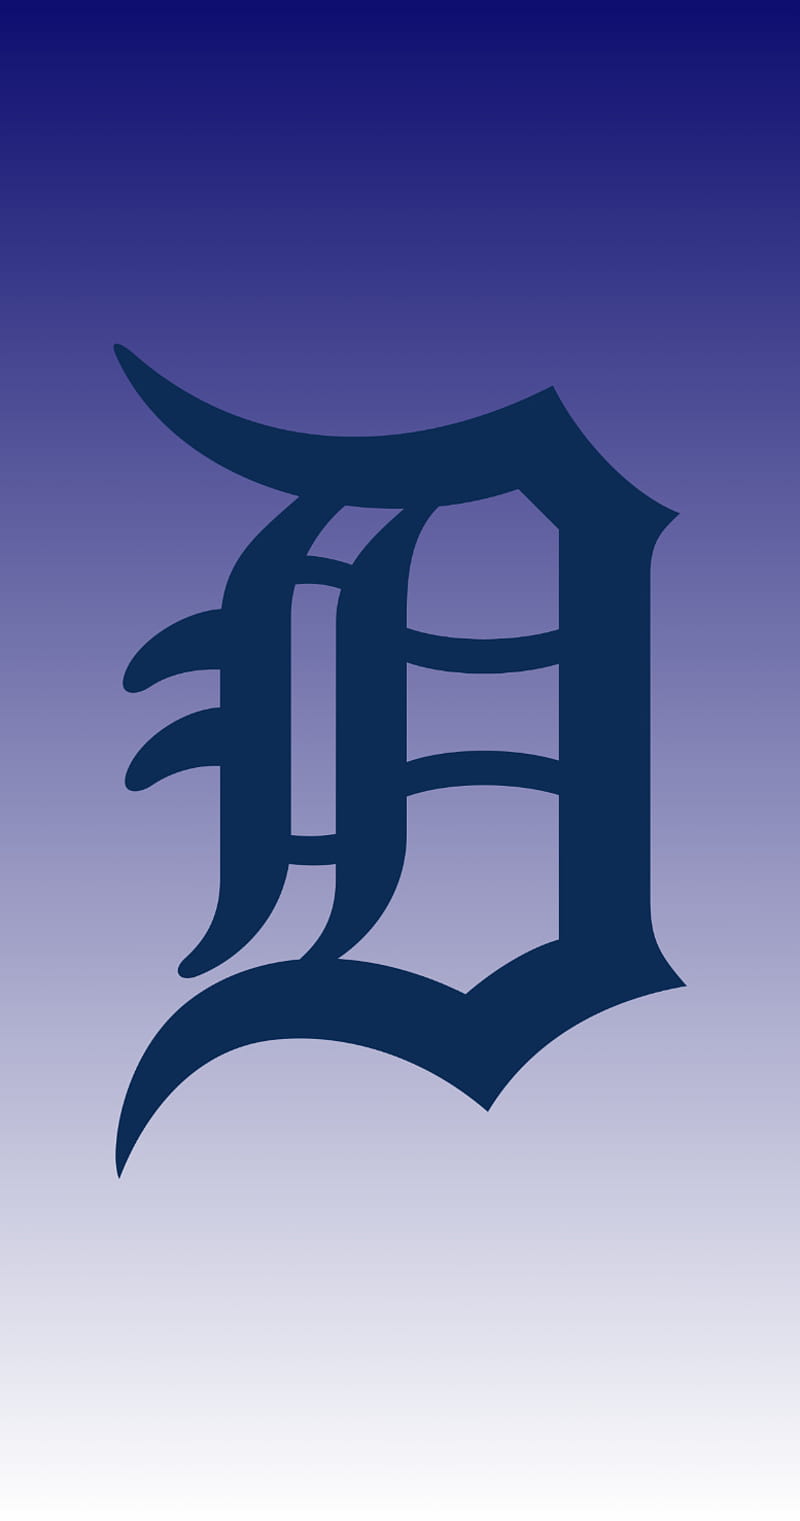 Download 4K Detroit Tigers Logo Wallpaper